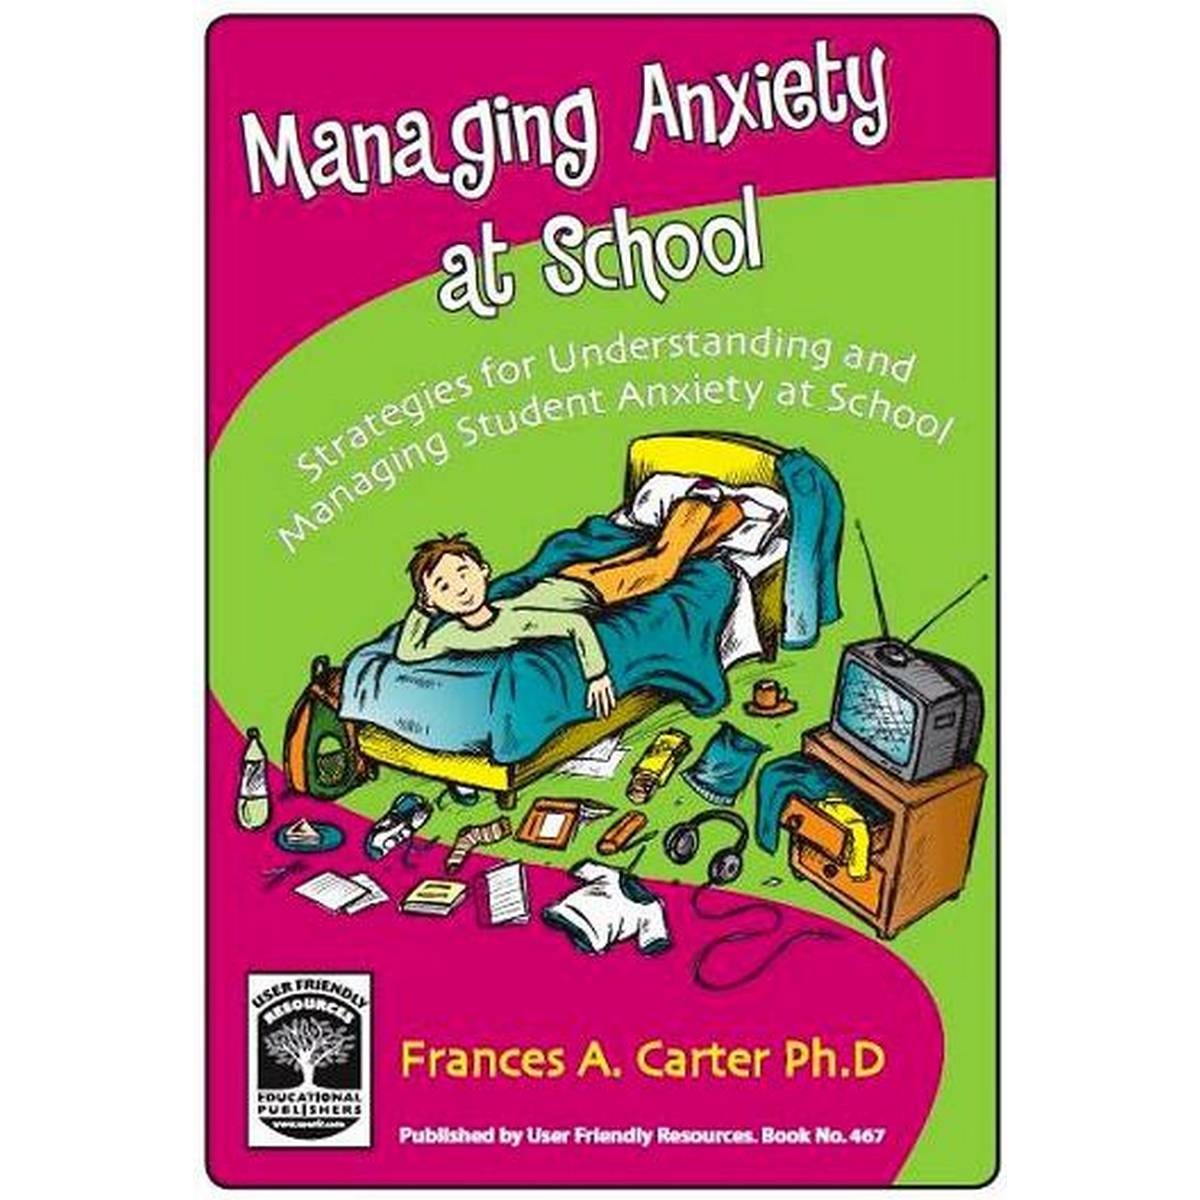 Managing Anxiety at School